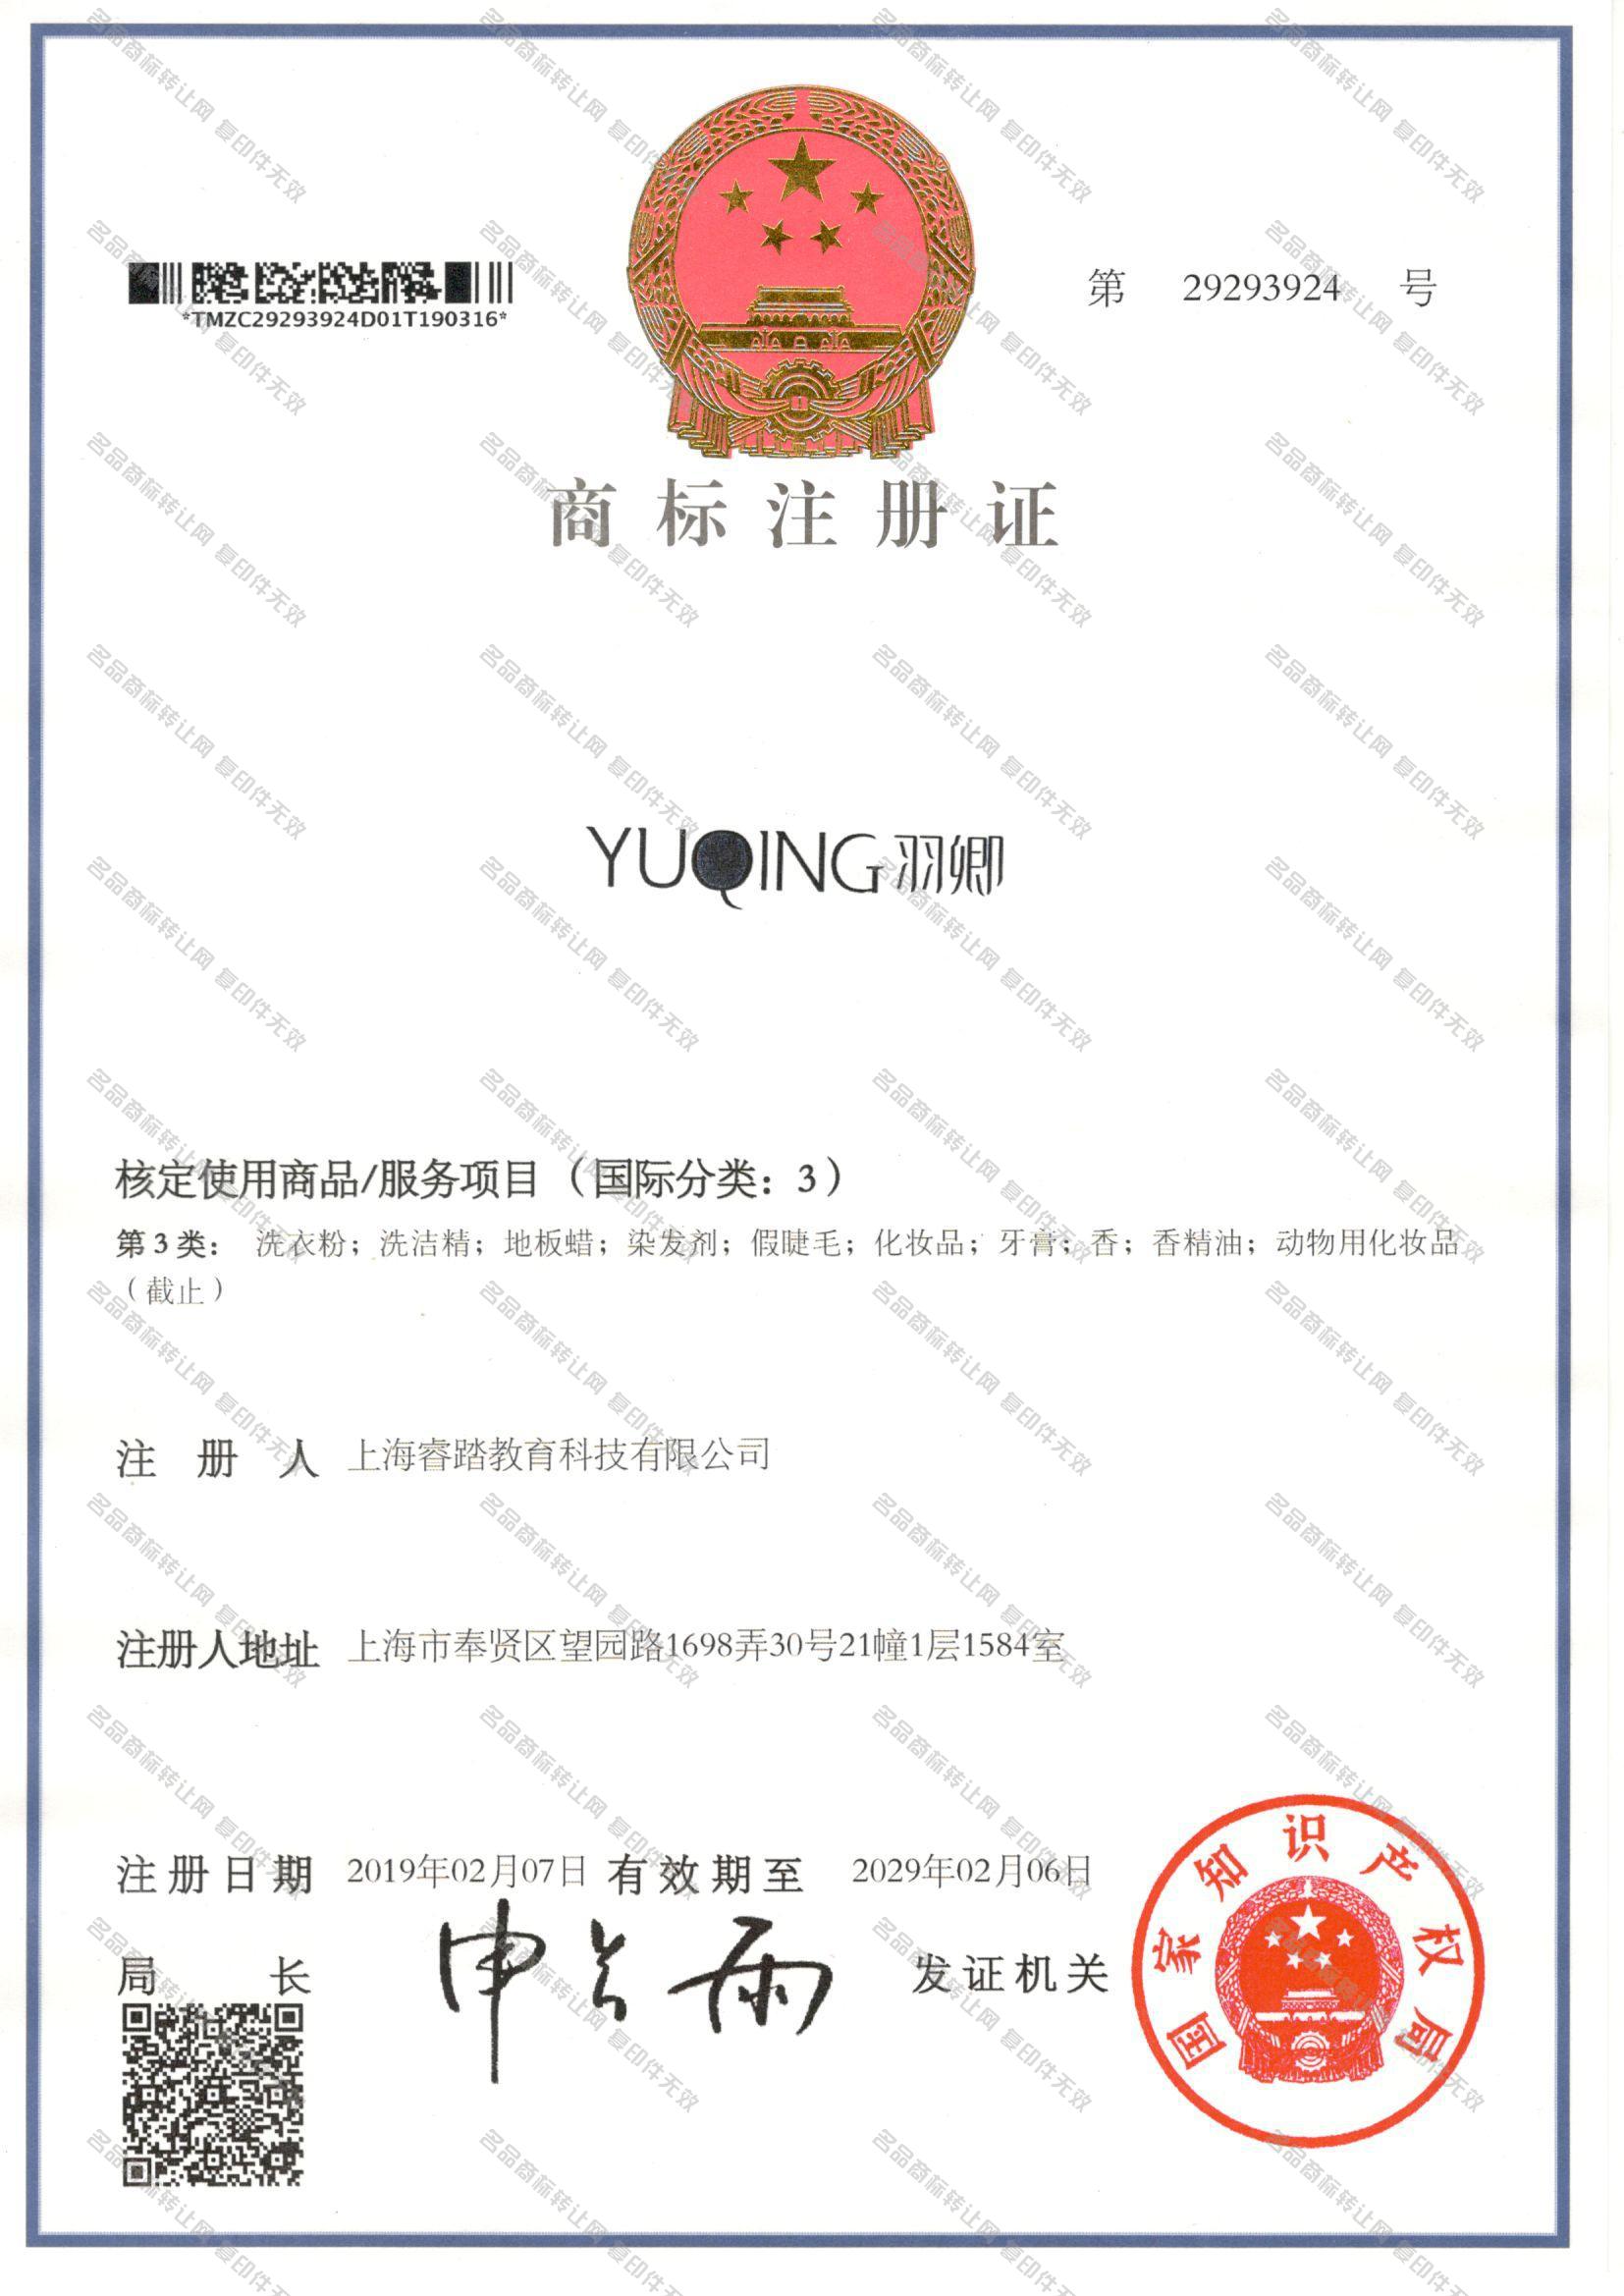 羽卿 YUQING注册证